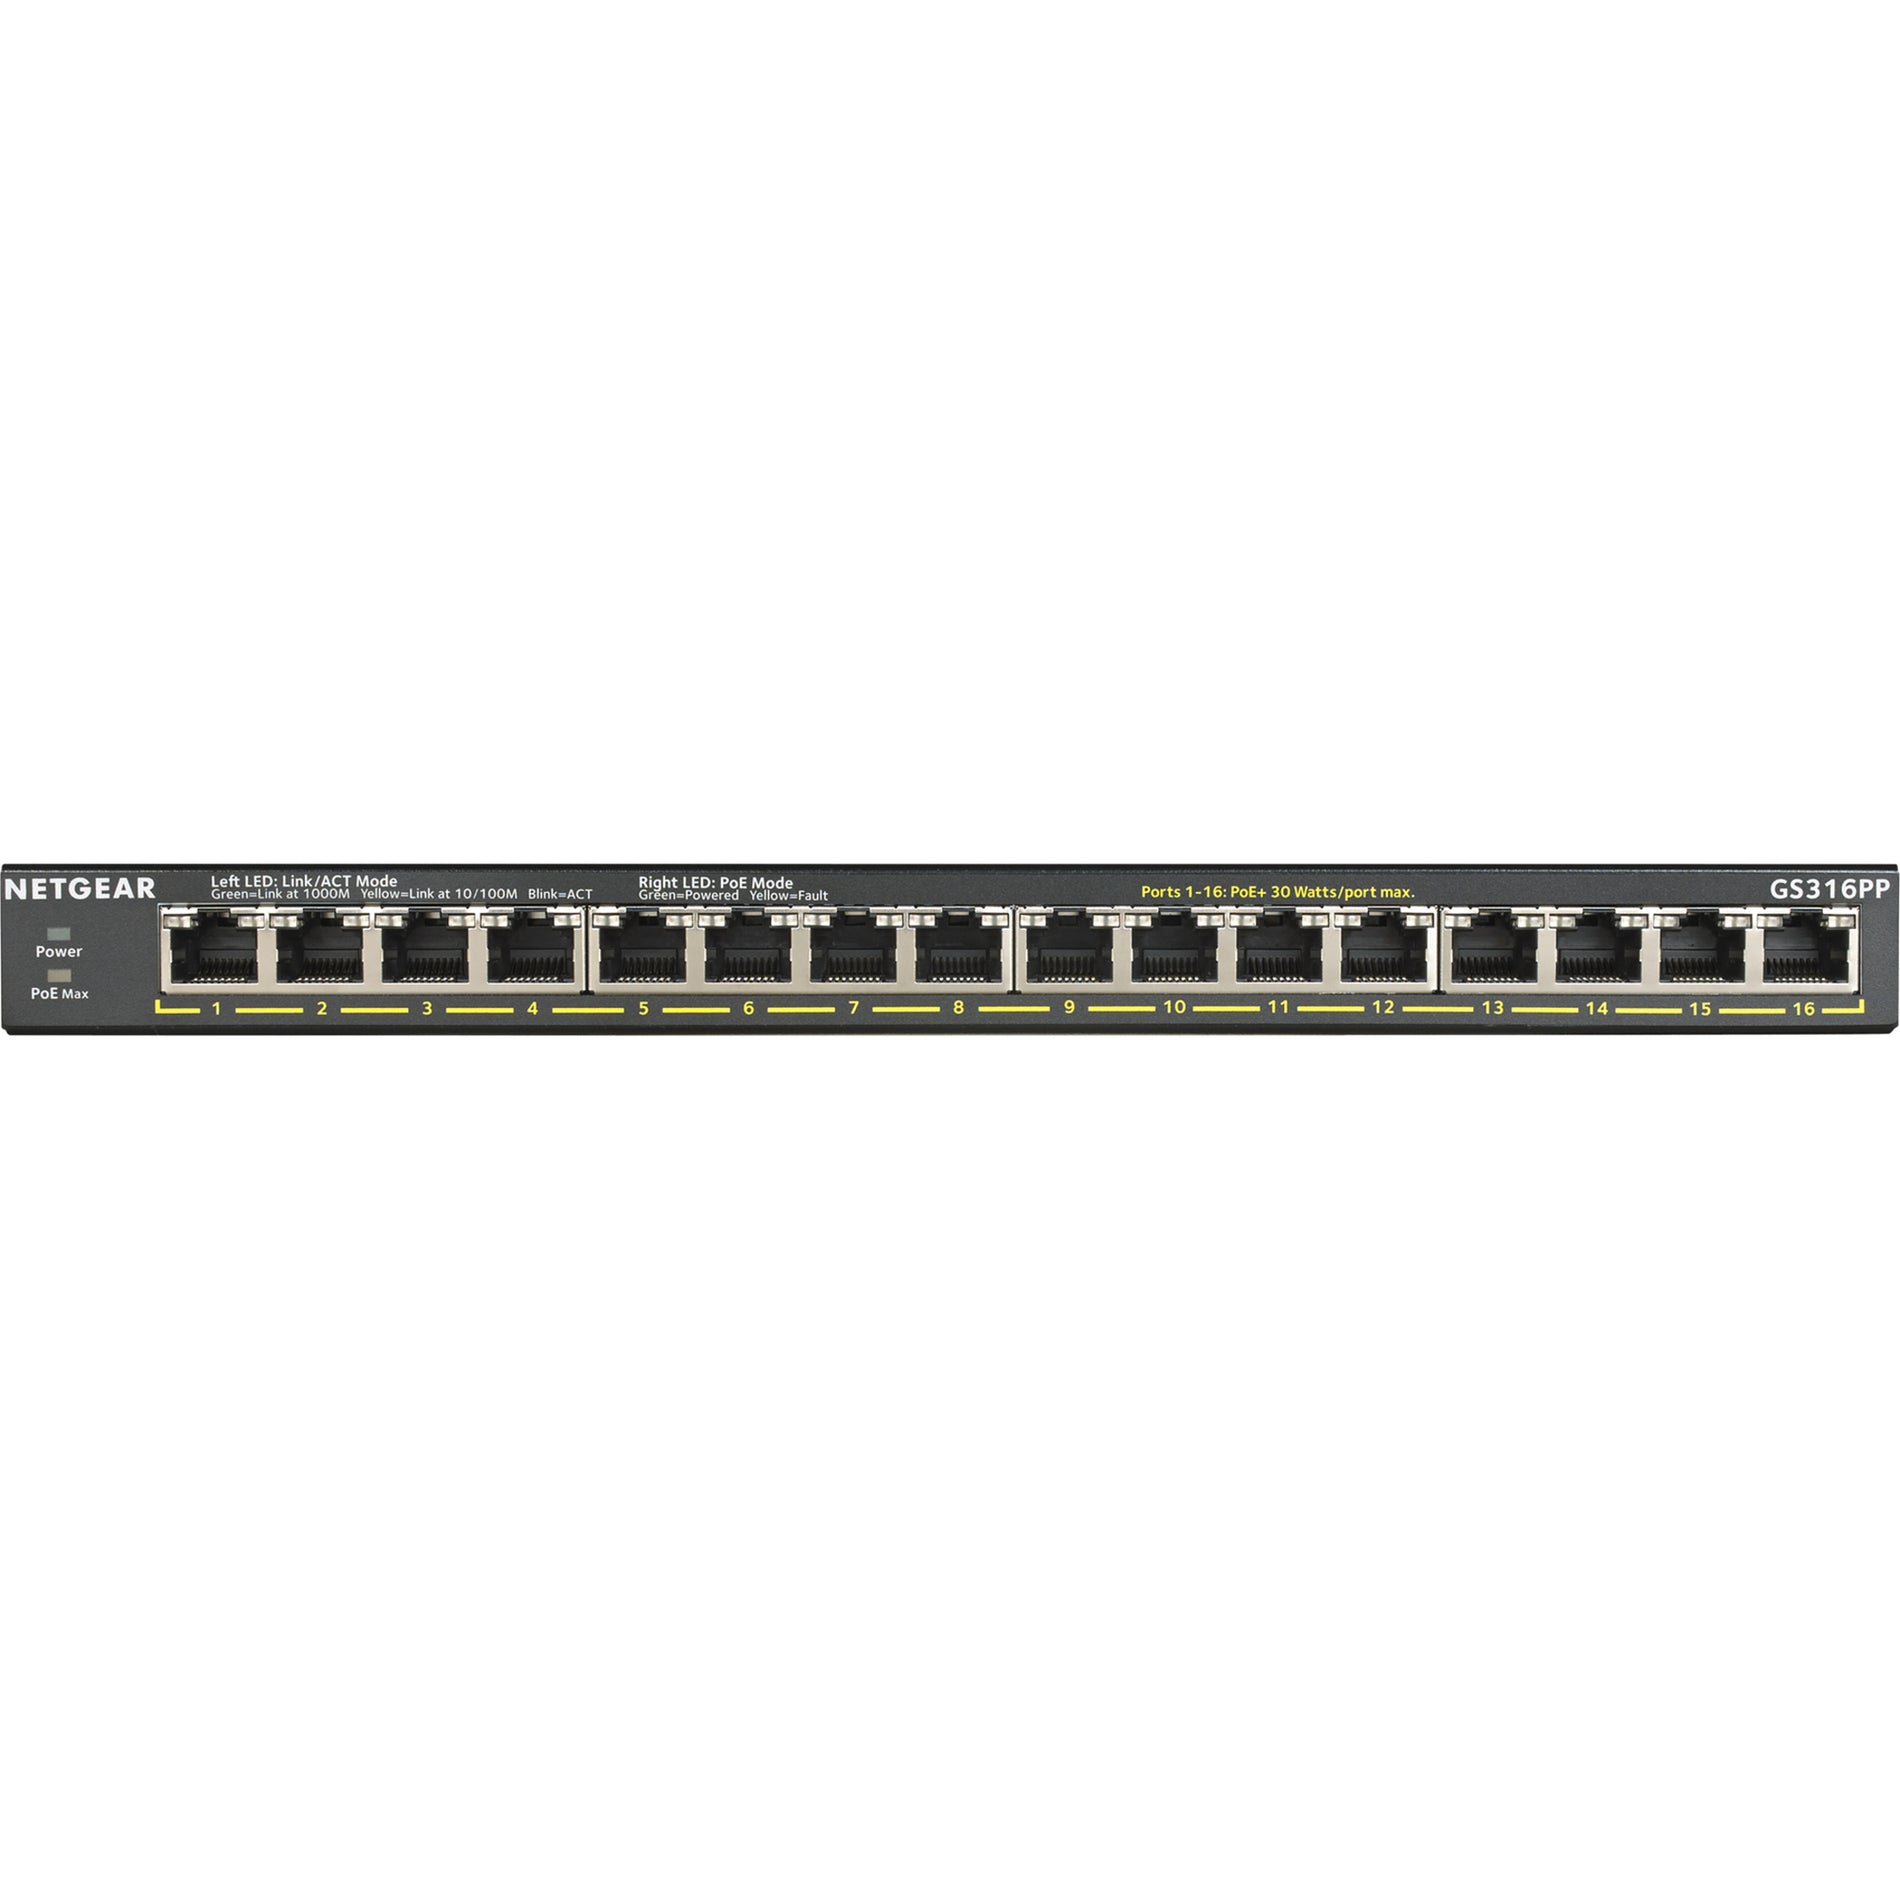 Netgear GS316PP-100NAS GS316PP Ethernet Switch, 16 Port Gigabit Ethernet PoE+, 3 Year Lifetime Warranty